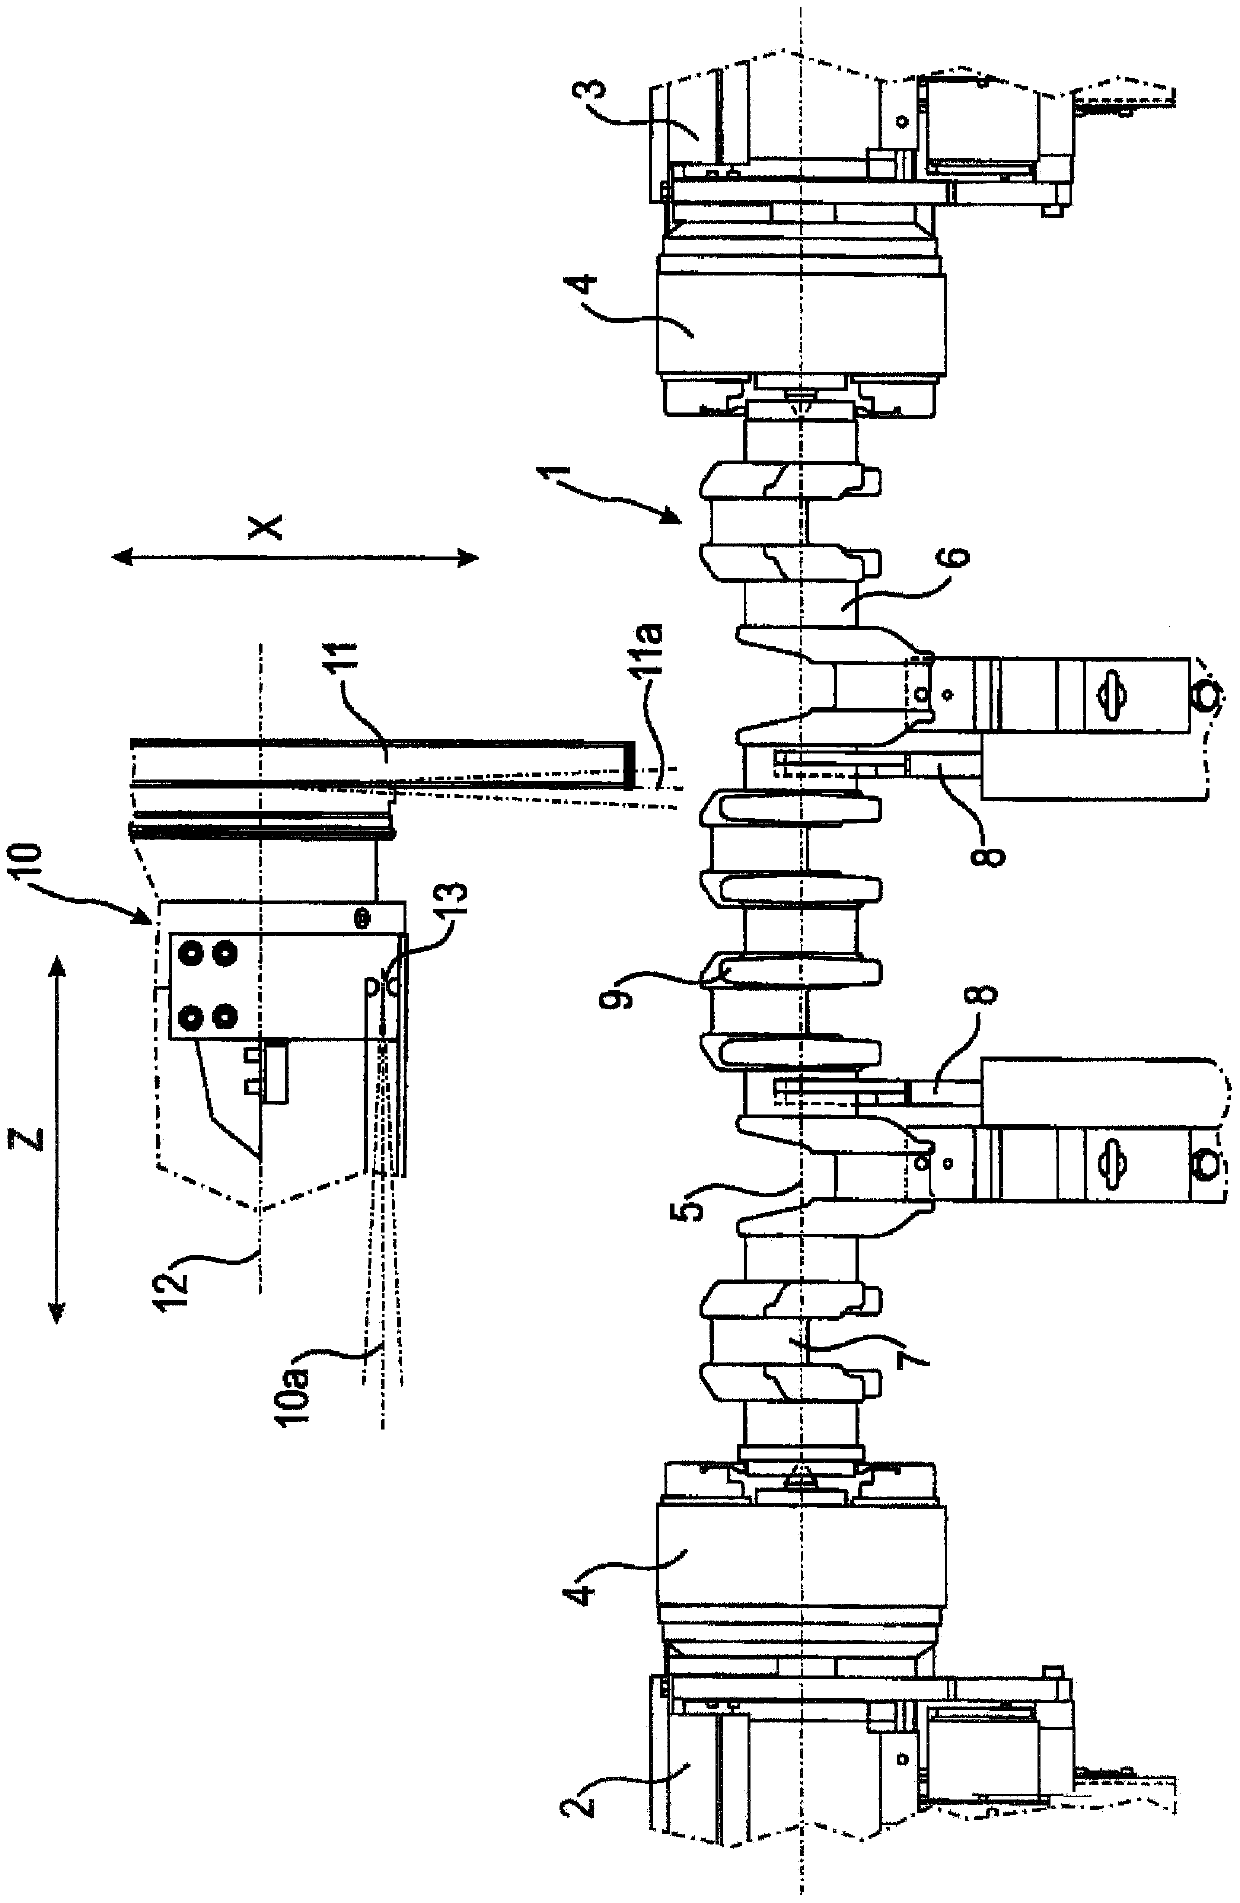 Grinder arrangement and method for pivoting a grinding spindle unit